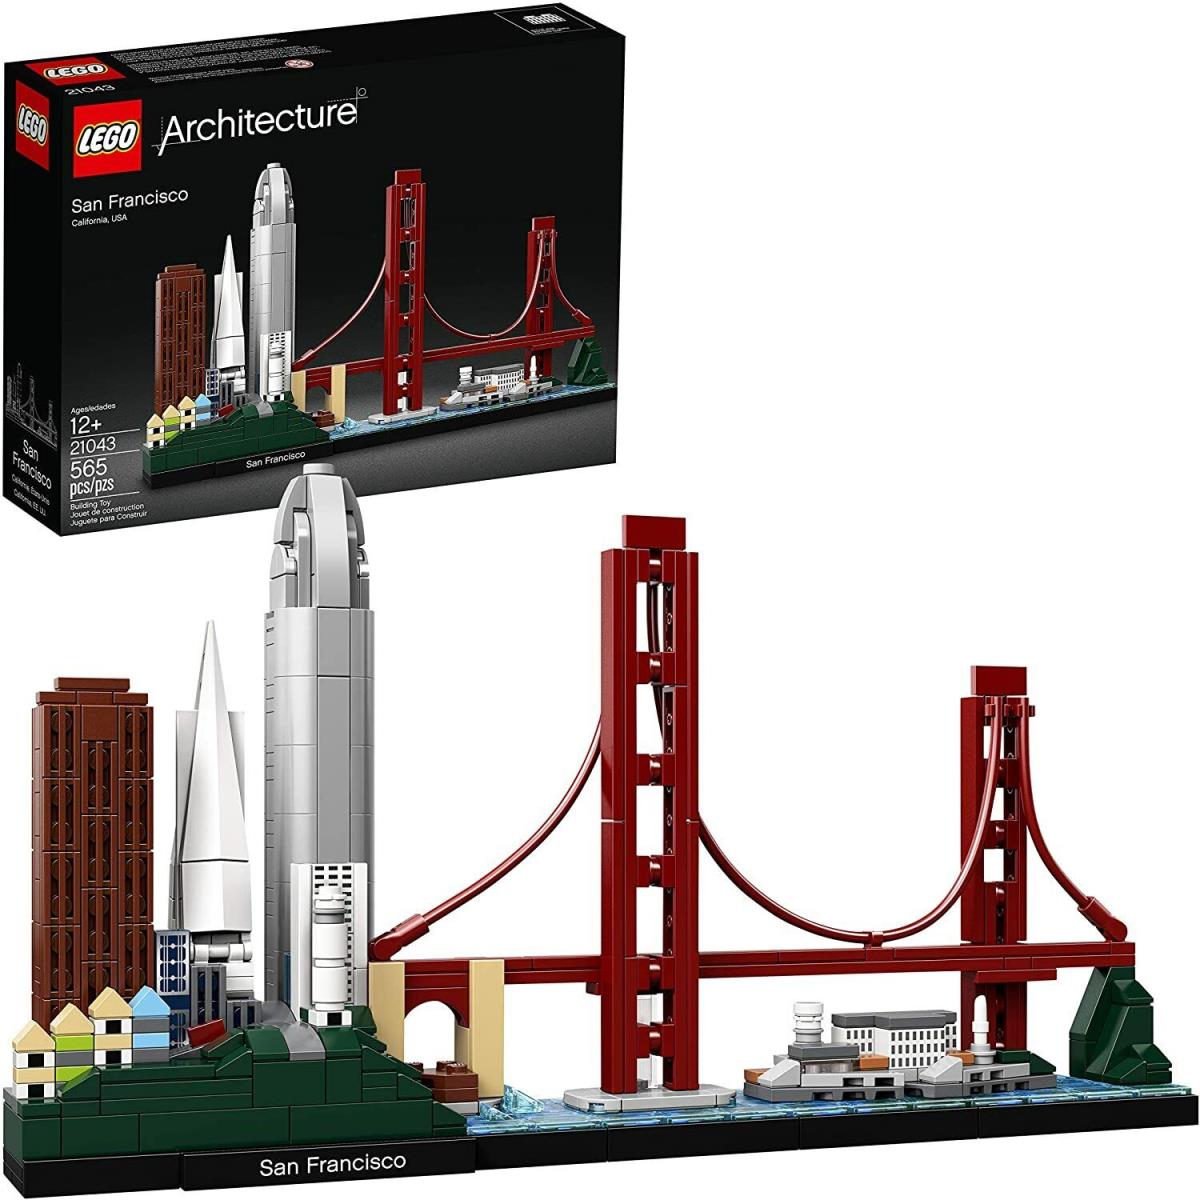 Lego Architecture 21043 San Francisco Usa 565 Pieces in Retail Box